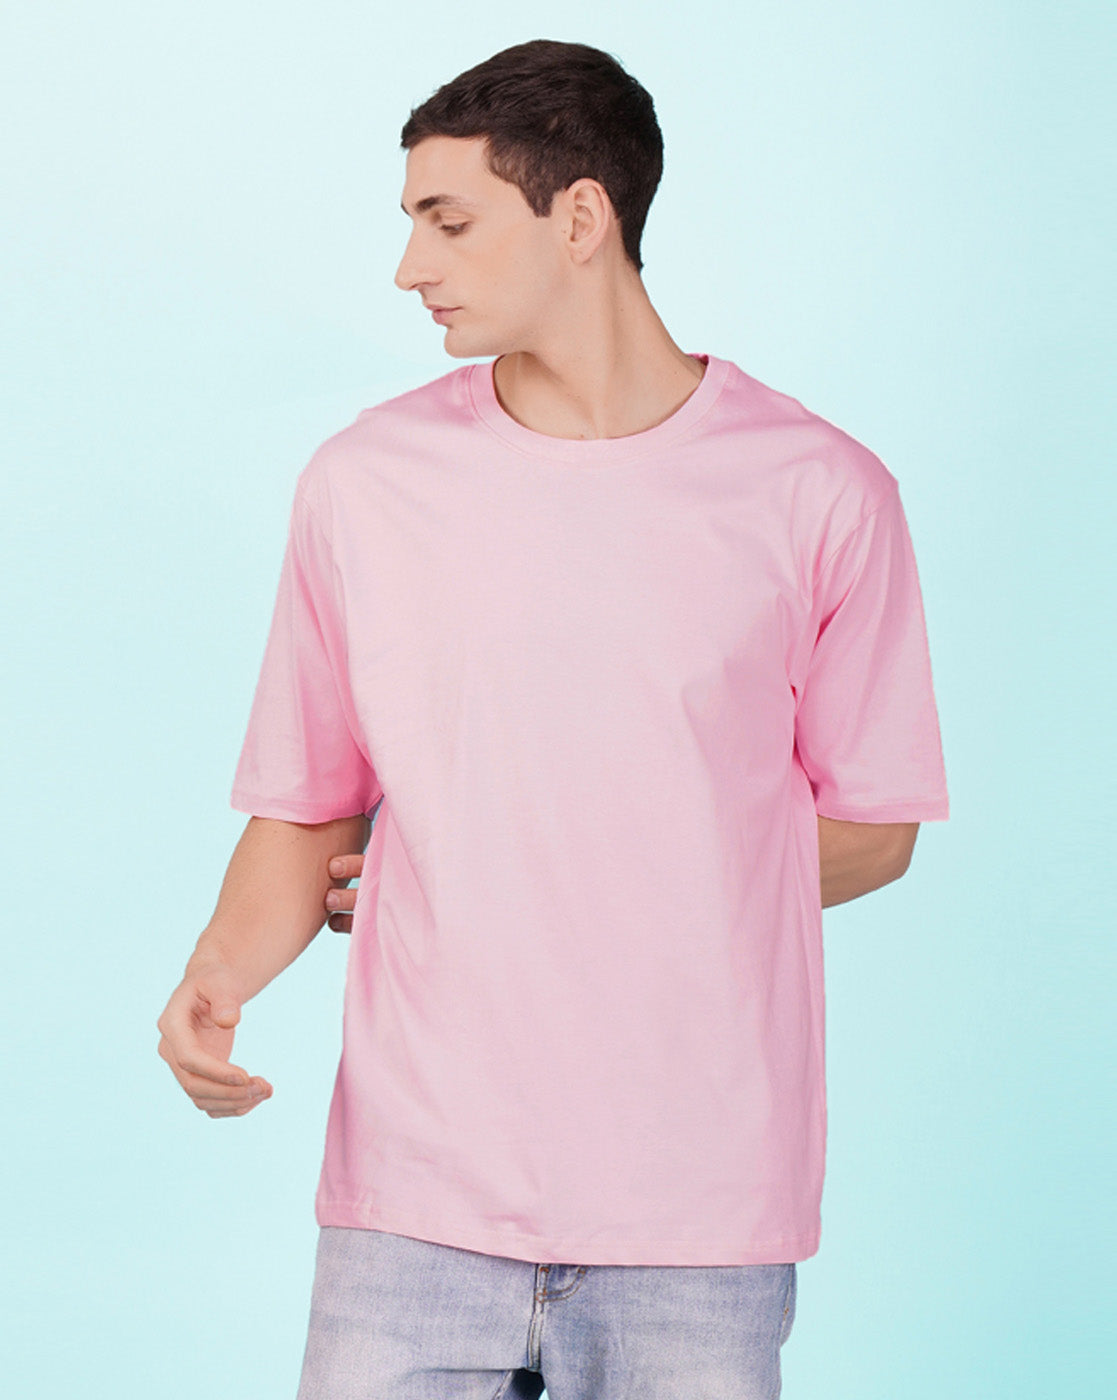 Nusyl Men Solid Light Pink oversized t-shirt